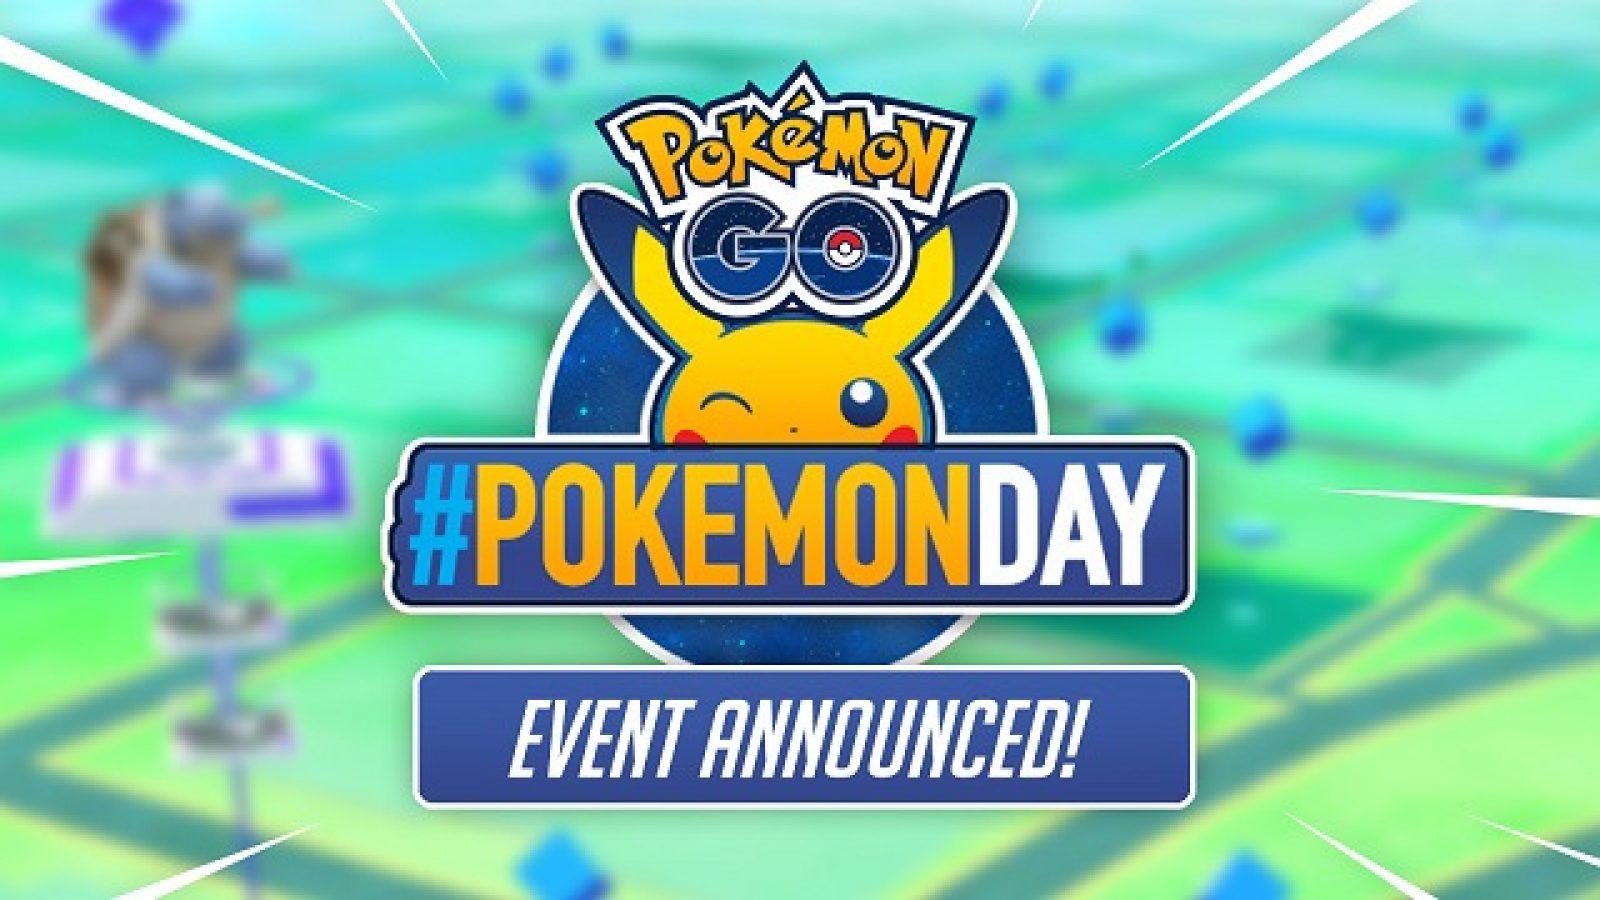 Pokemon Go Pokemon Day Event Announced! Dexerto